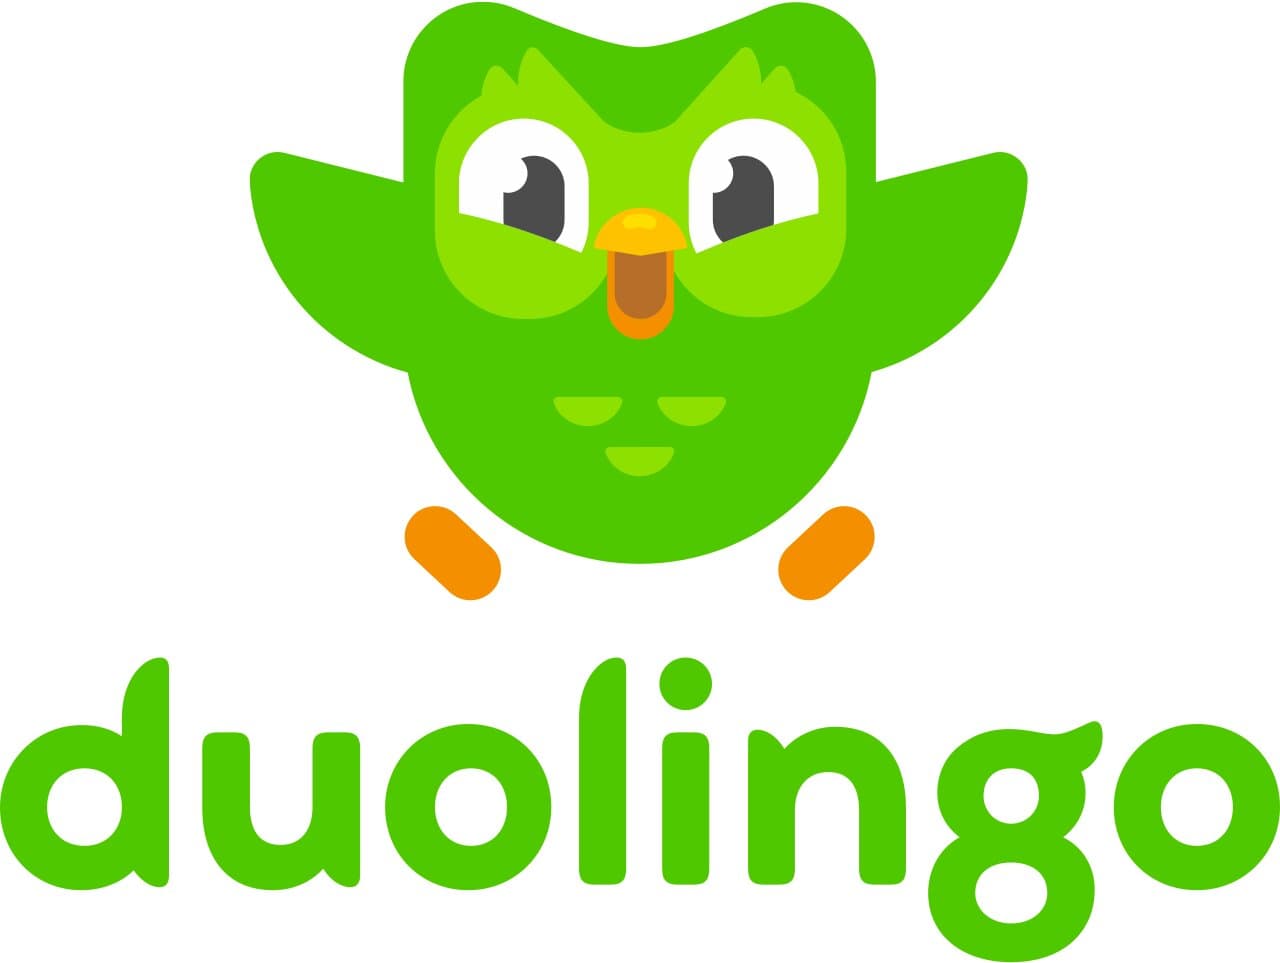 is duolingo safe